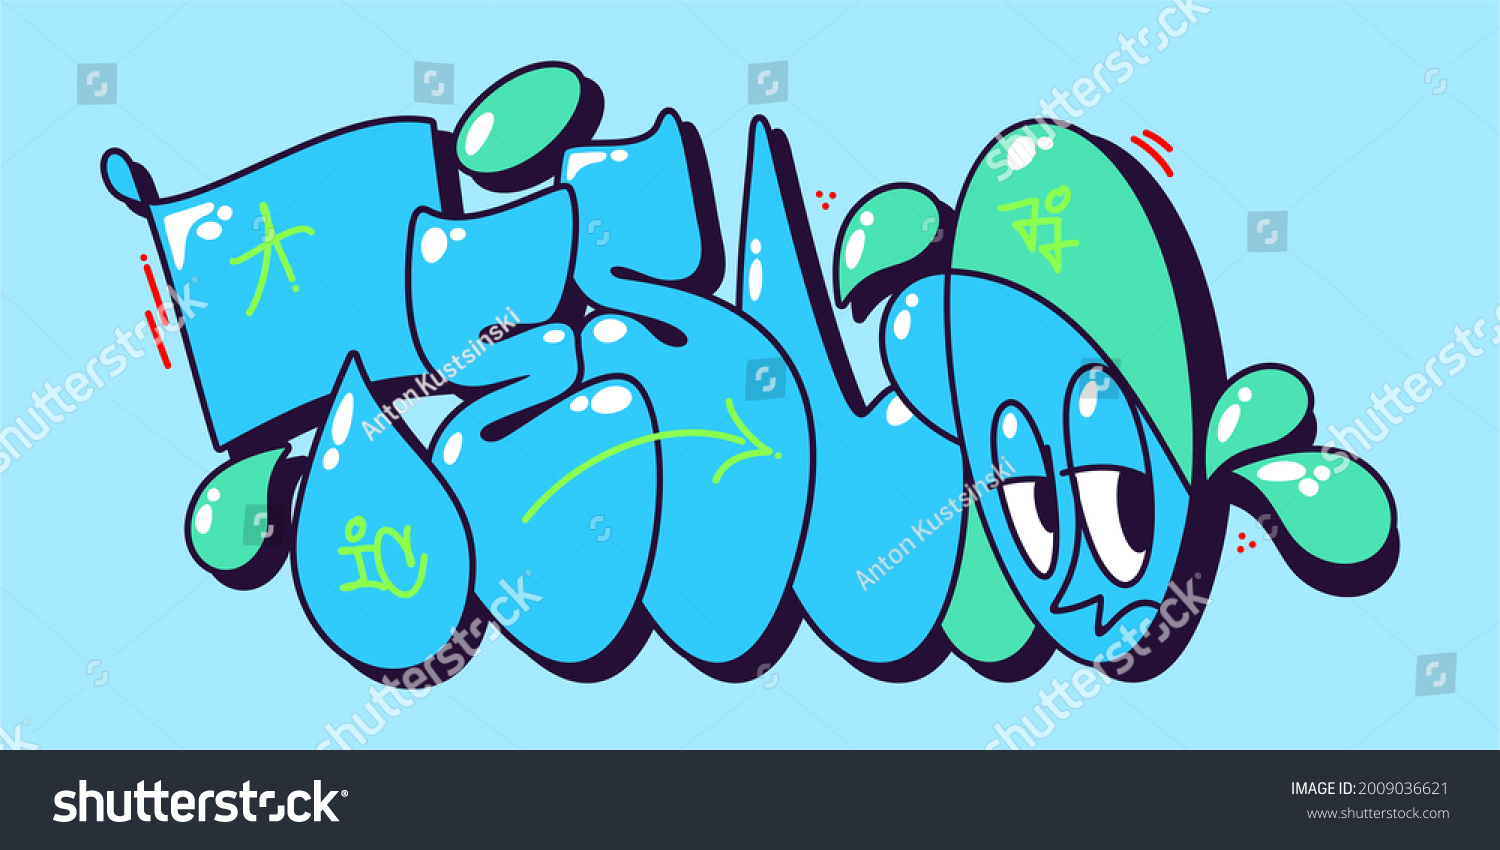 SVG of Simple Abstract Urban Graffiti Street Art Word Tesl Lettering And Bboy Dancer Character Vector Illustration Art svg